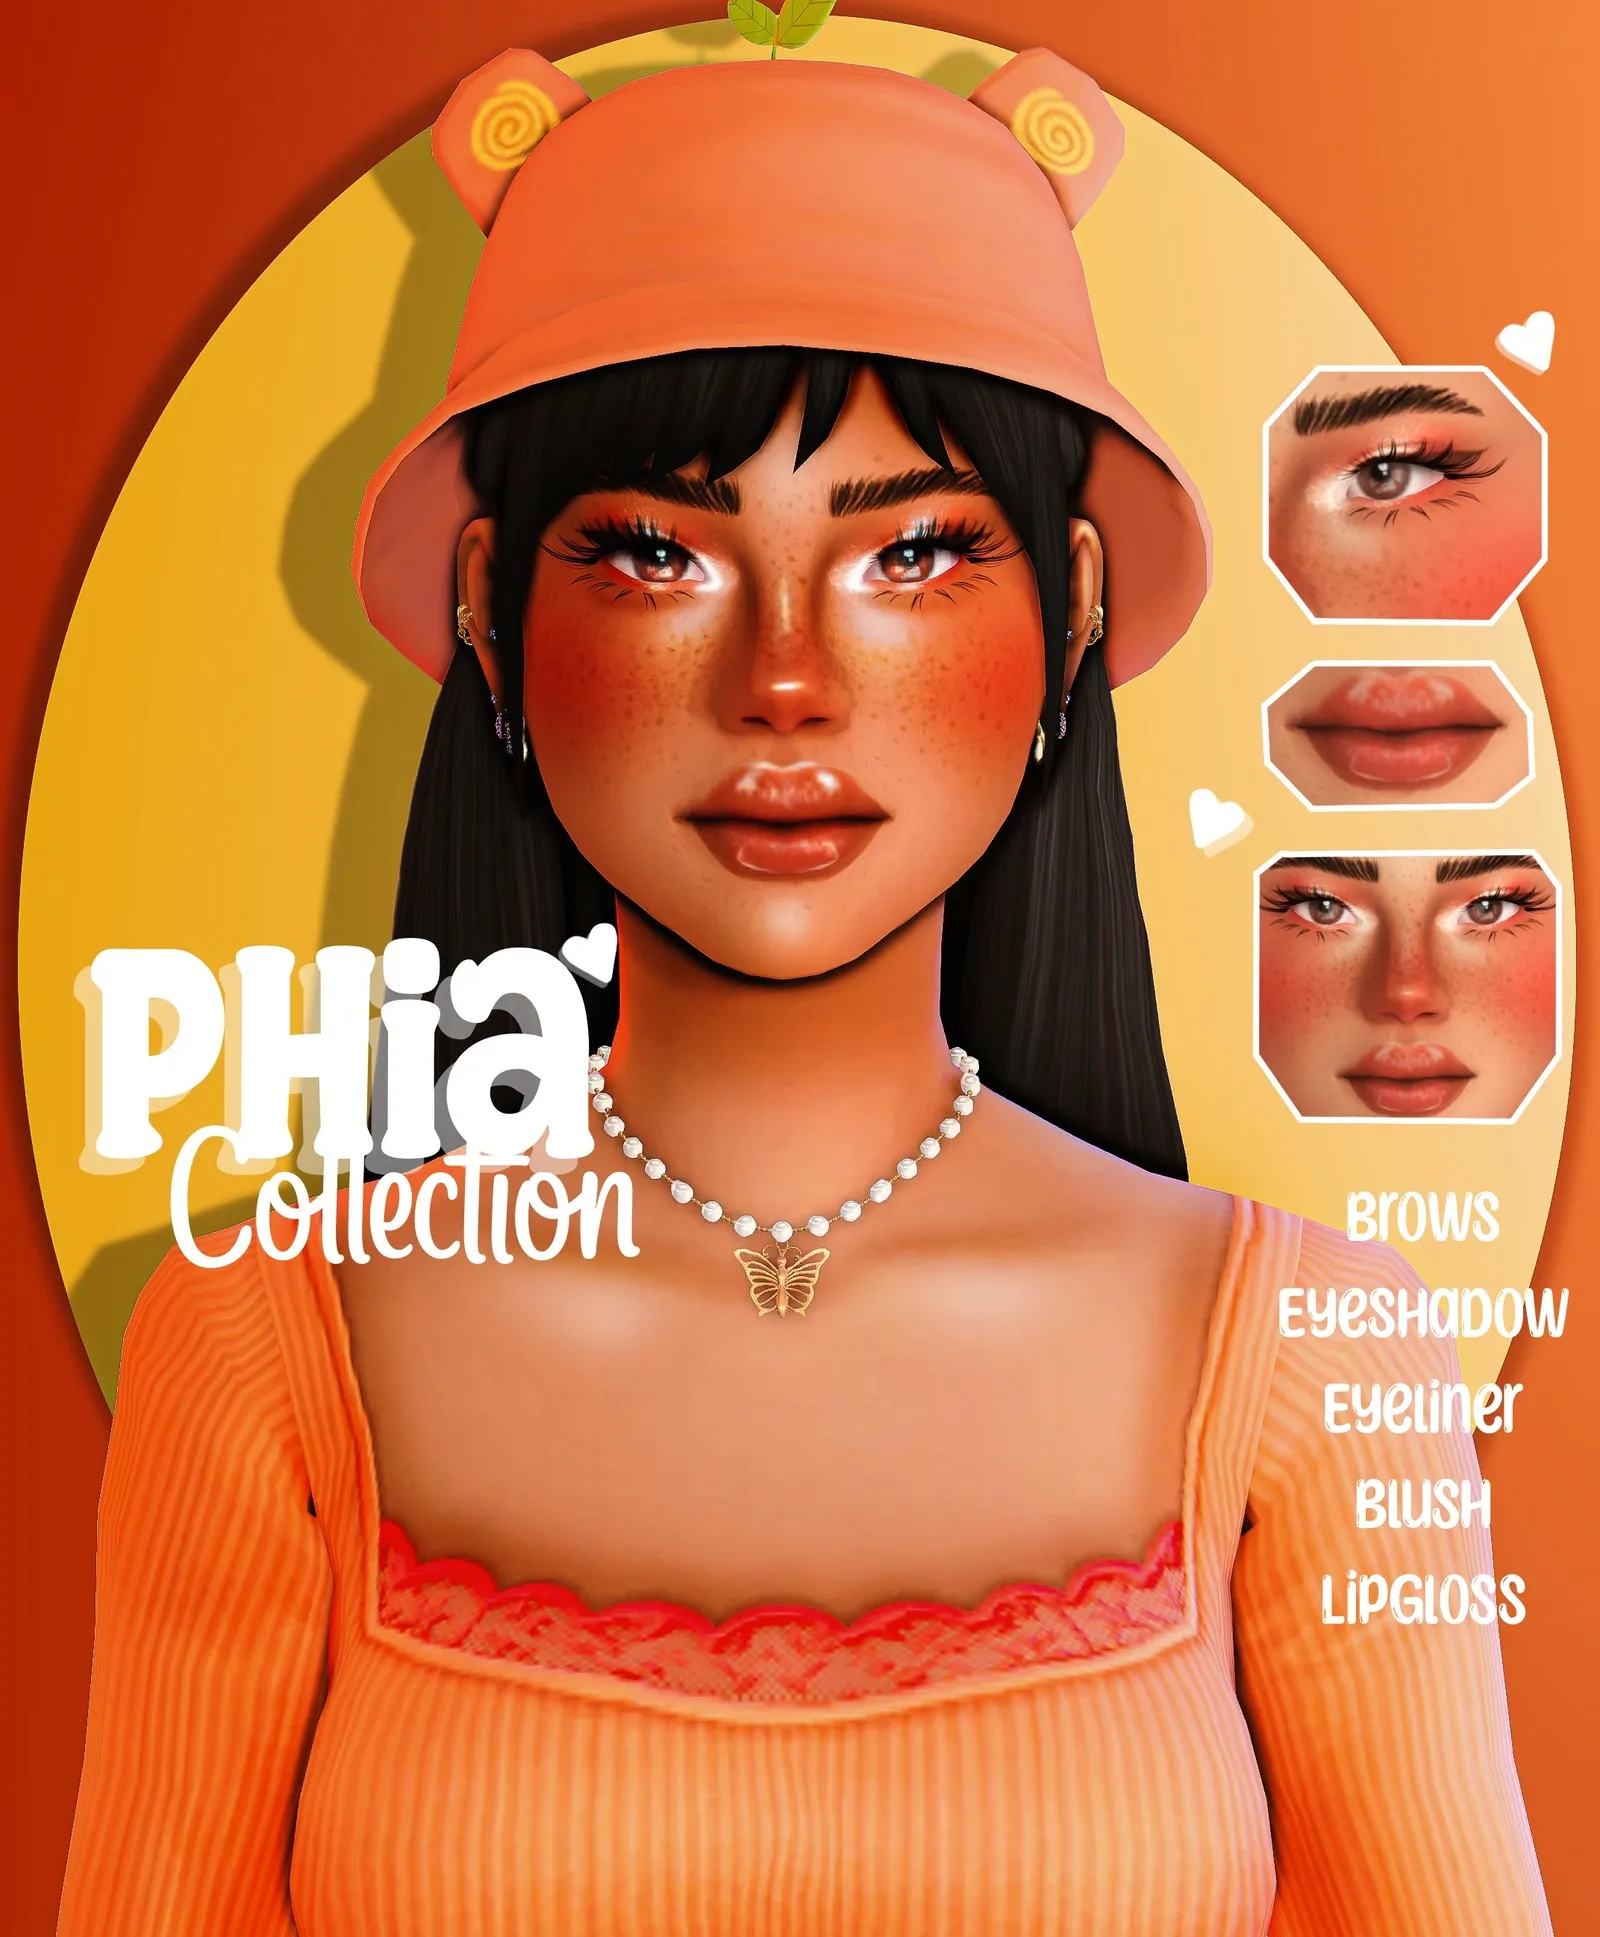 Phia collection